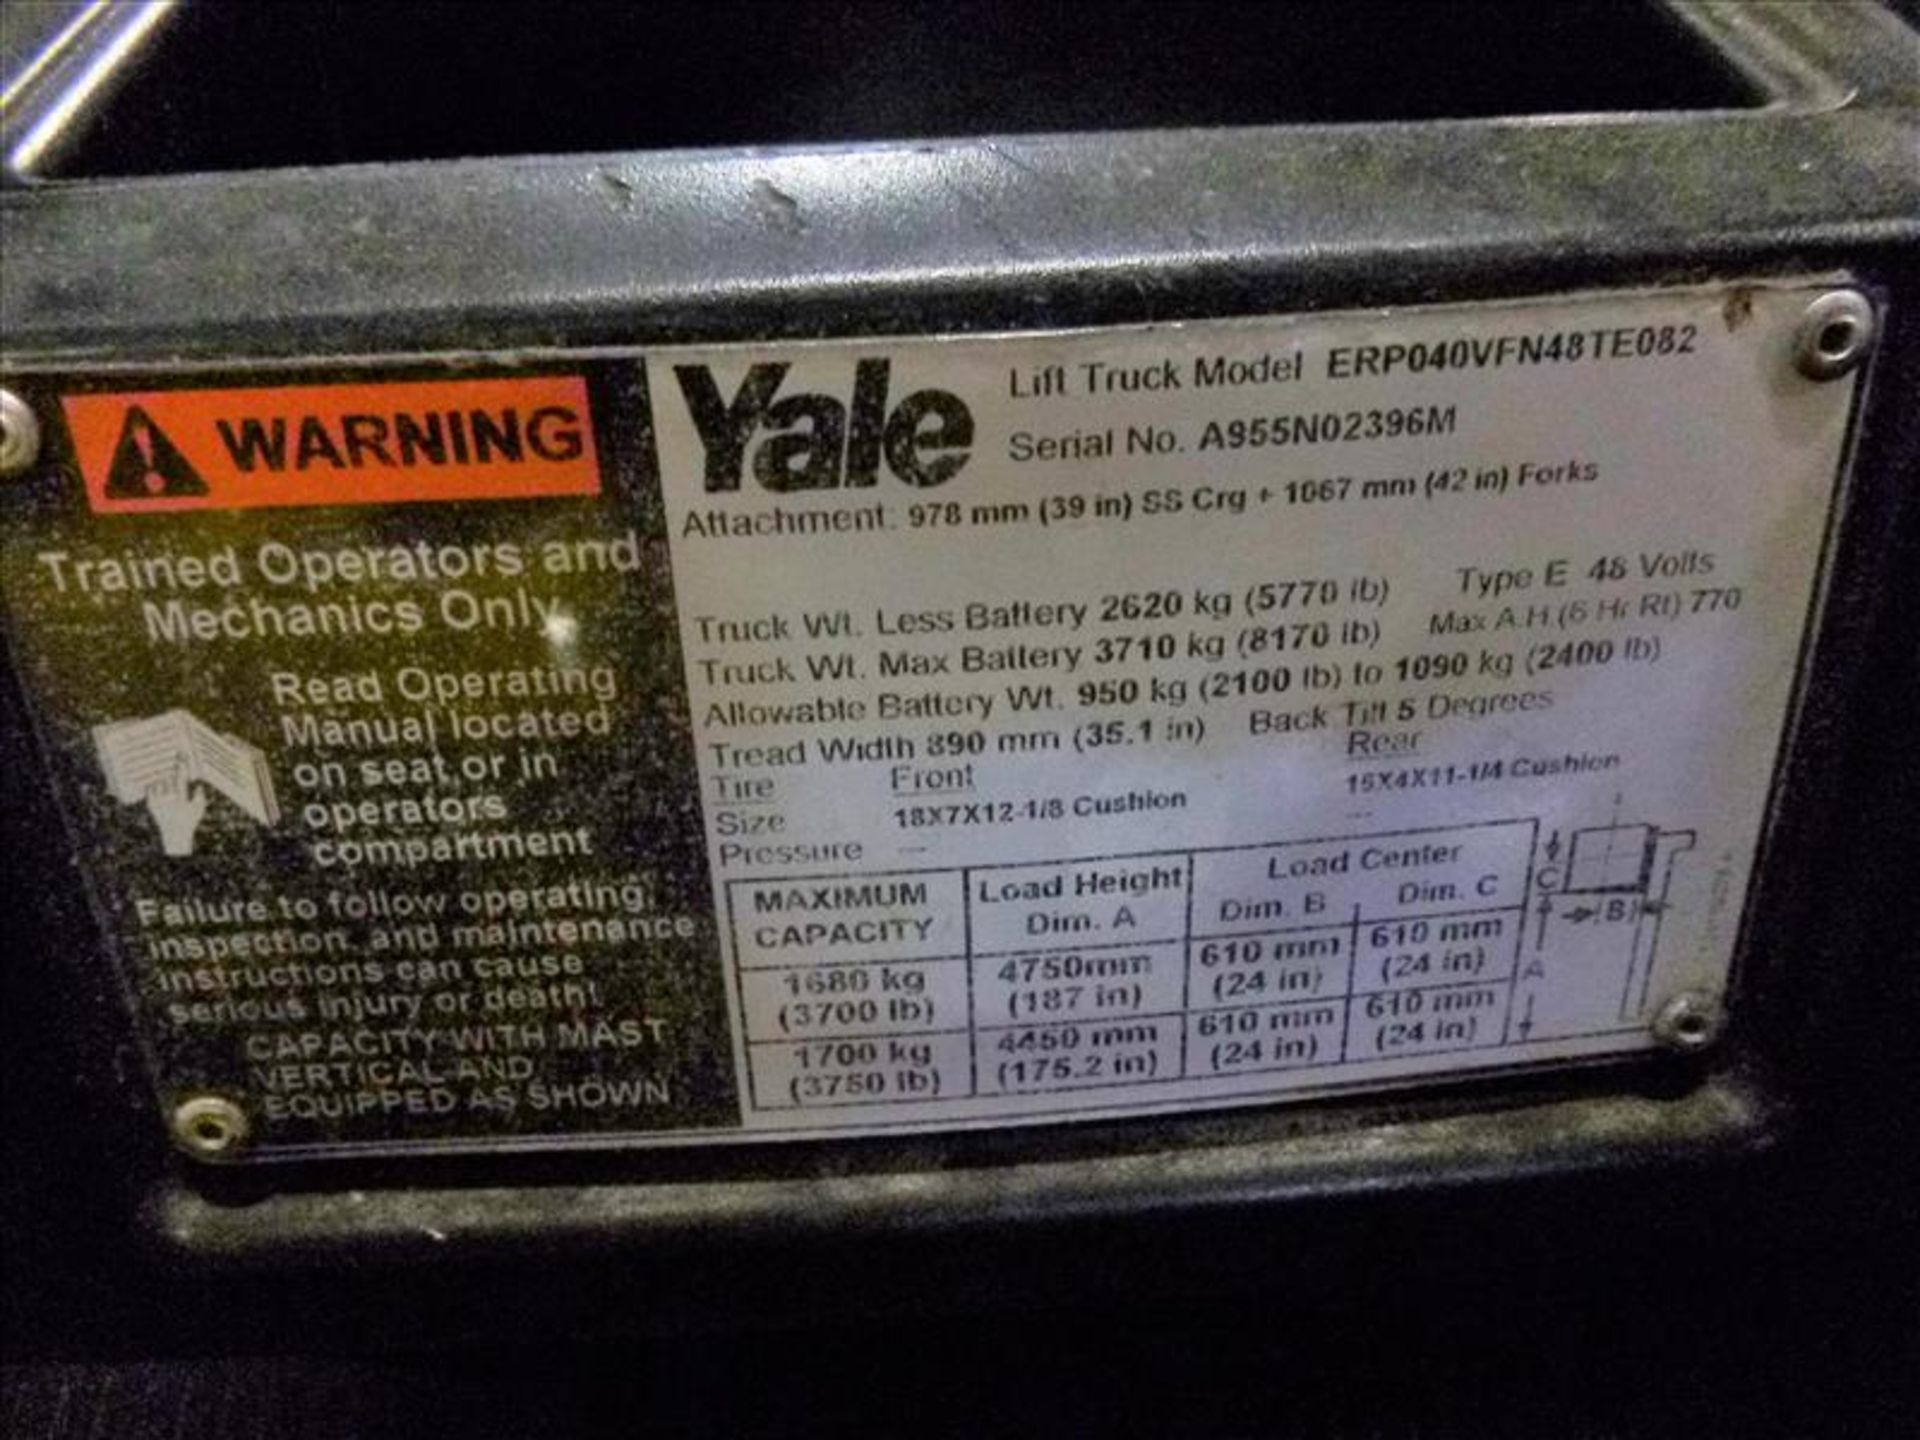 Yale fork lift truck, mod. ERP040VFN48TE082, ser. no. A955N02396M, 48V electric, 3700 lbs cap., - Image 4 of 4